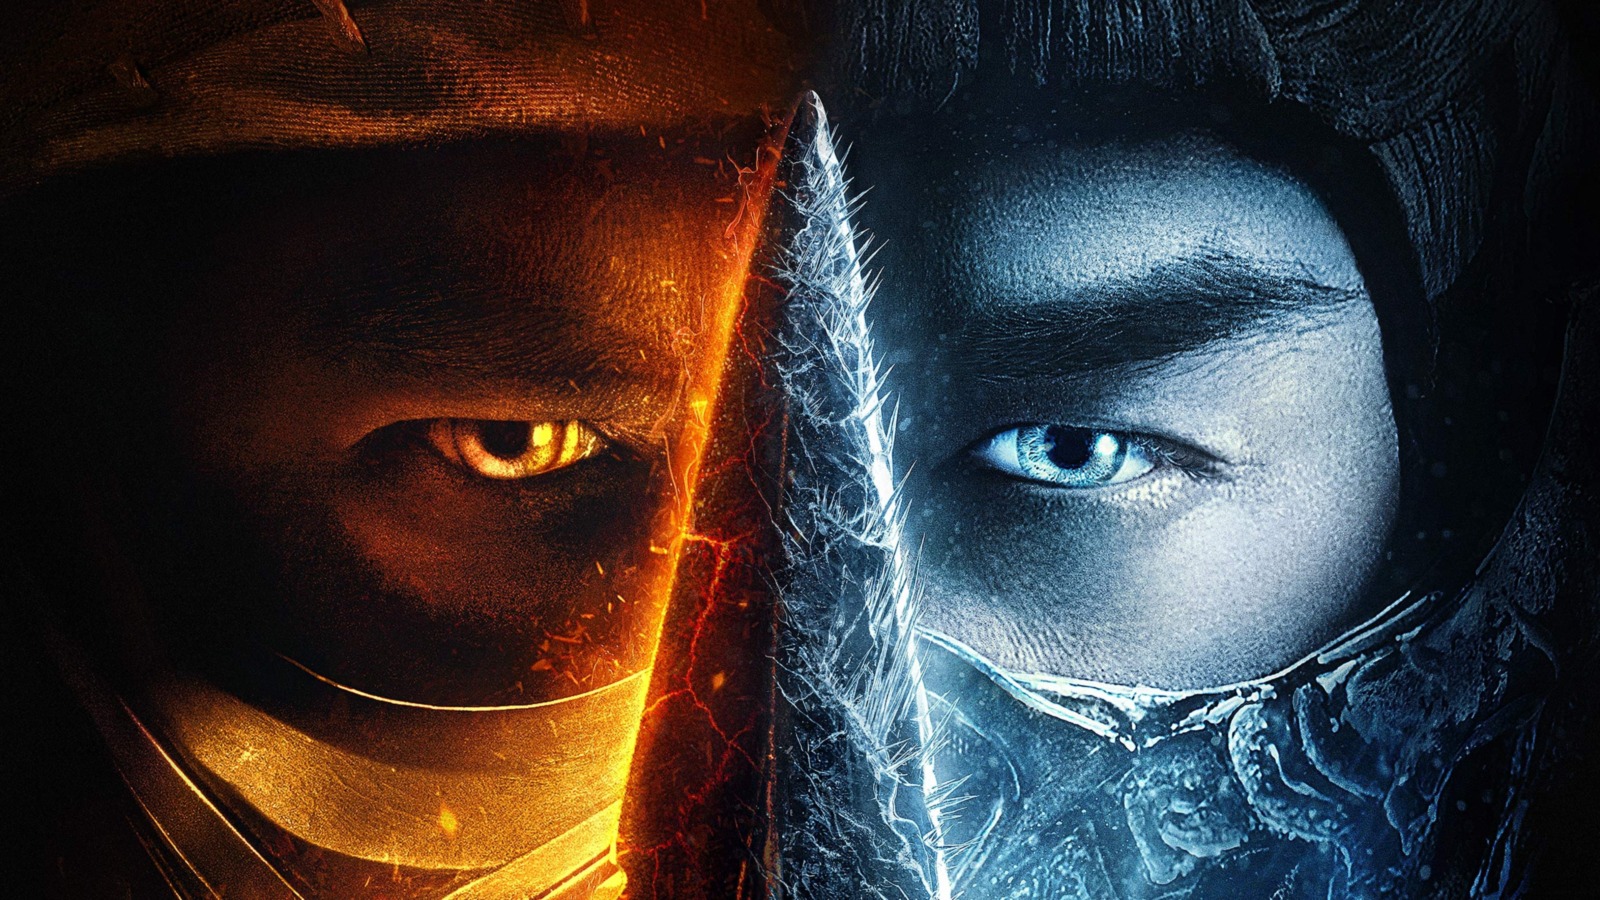 Mortal Kombat casts Sonya Blade, Kano, and new mystery lead